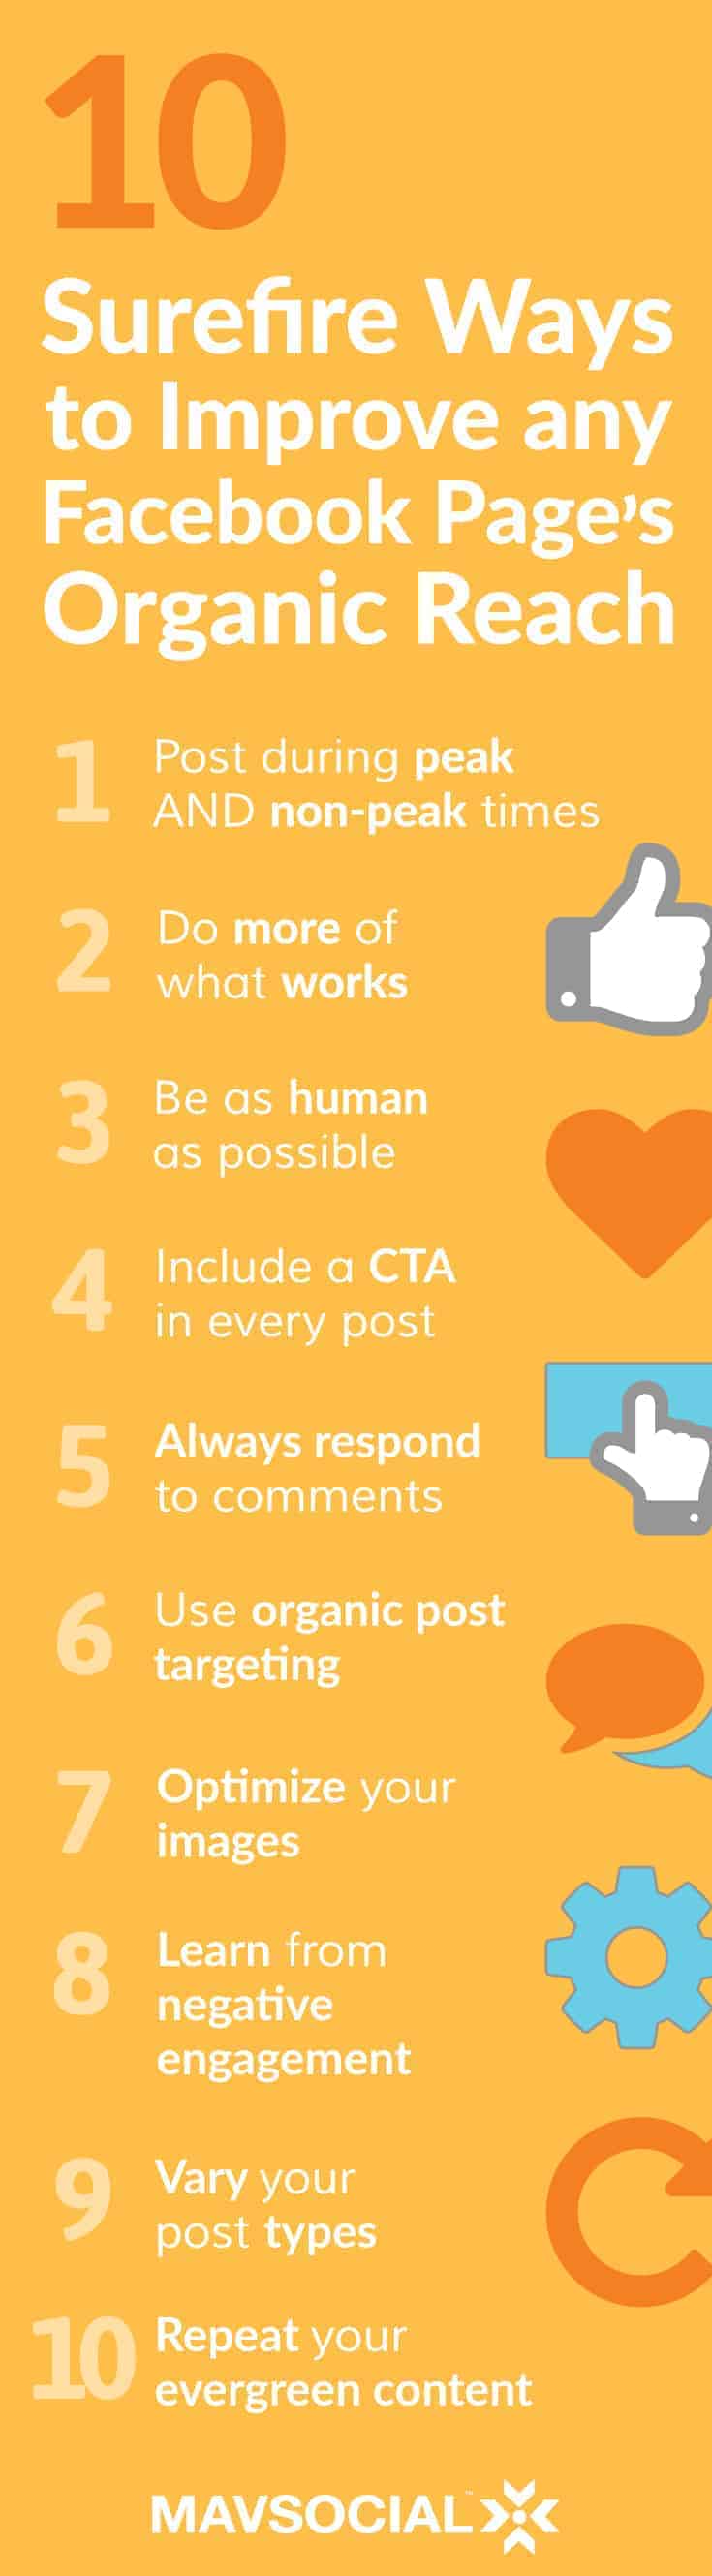 10 ways to improve organic reach on Facebook